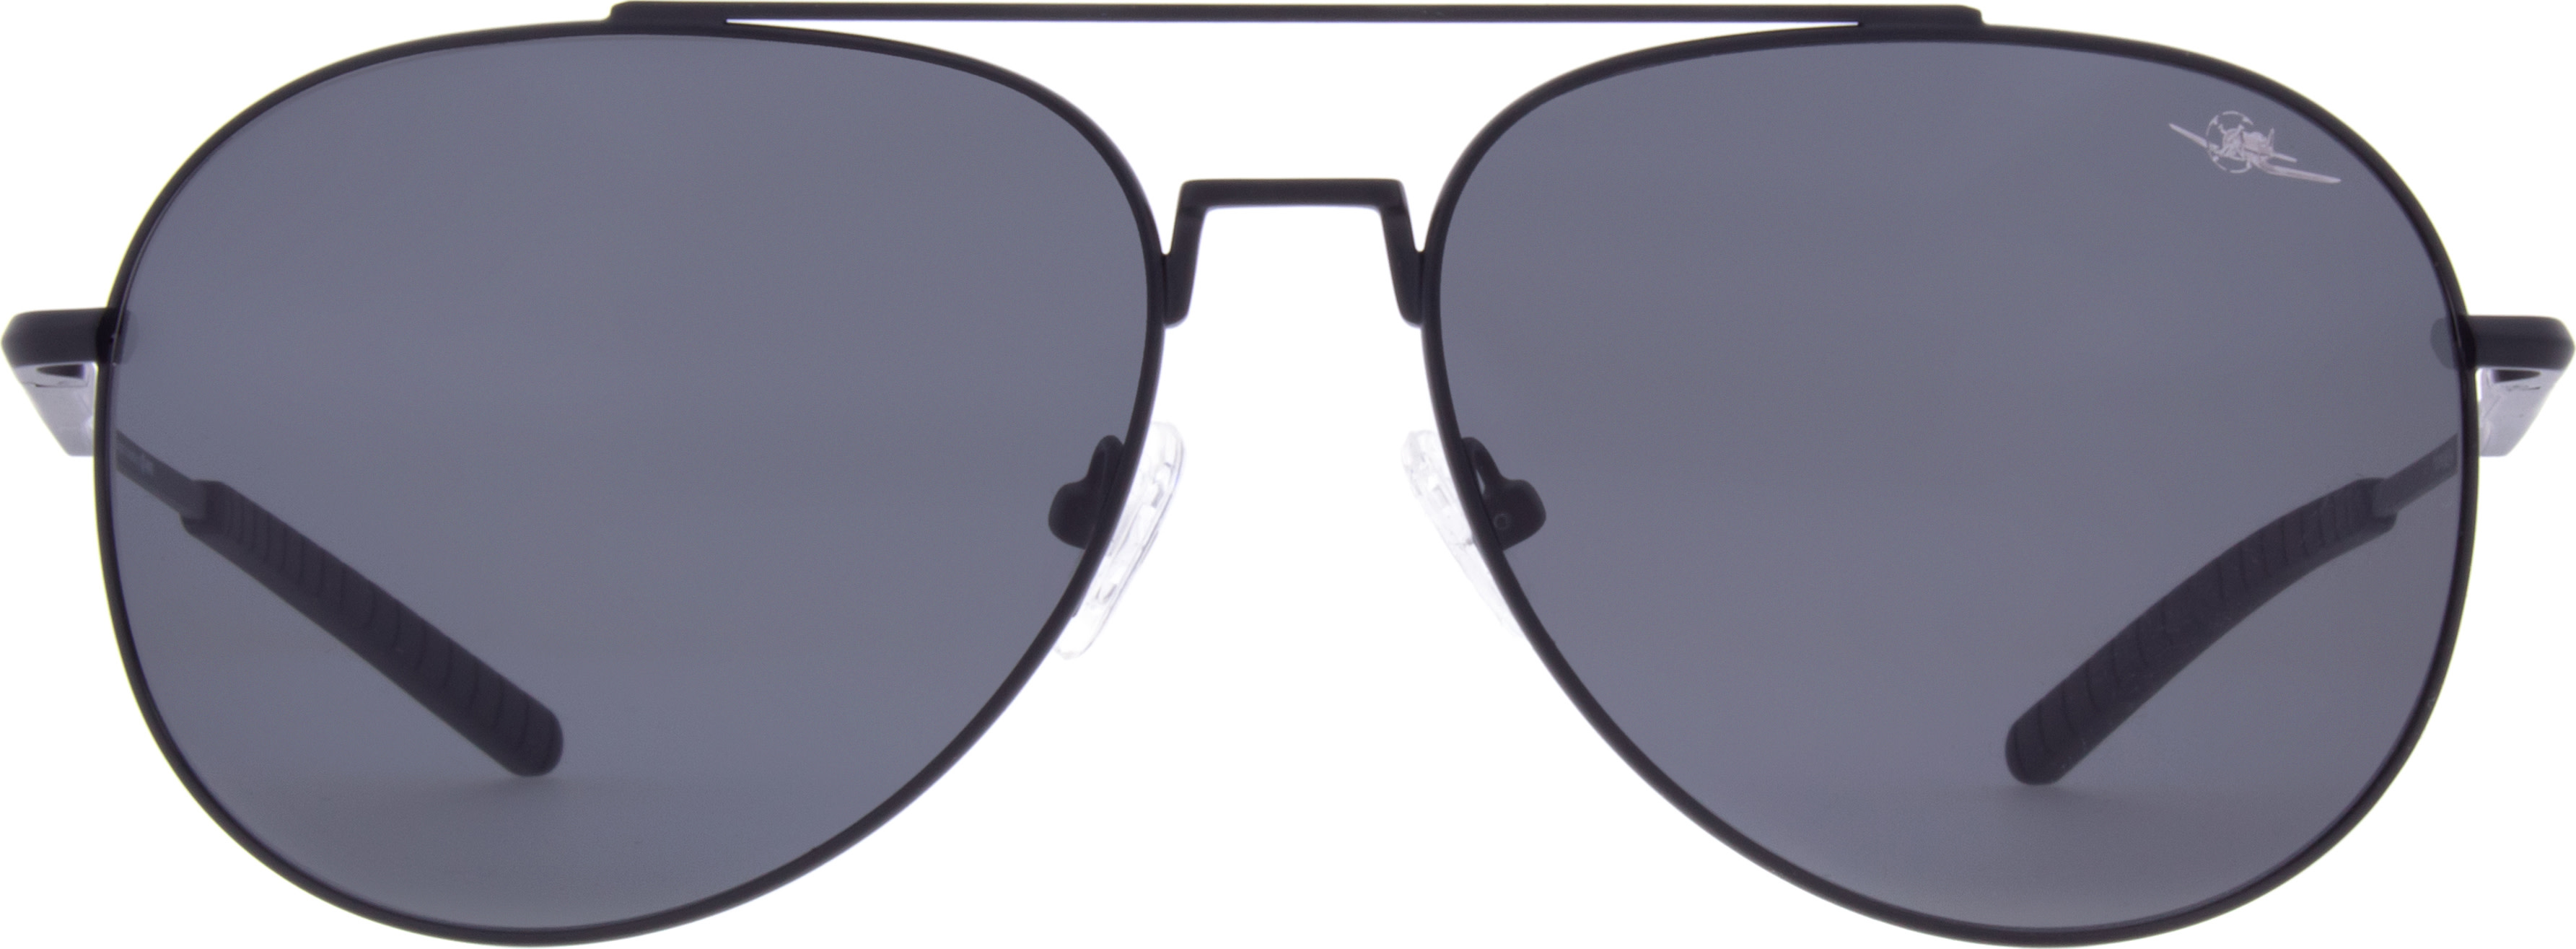 Foster Grant Men's Aviator Sport Sunglasses Silver - Walmart.com